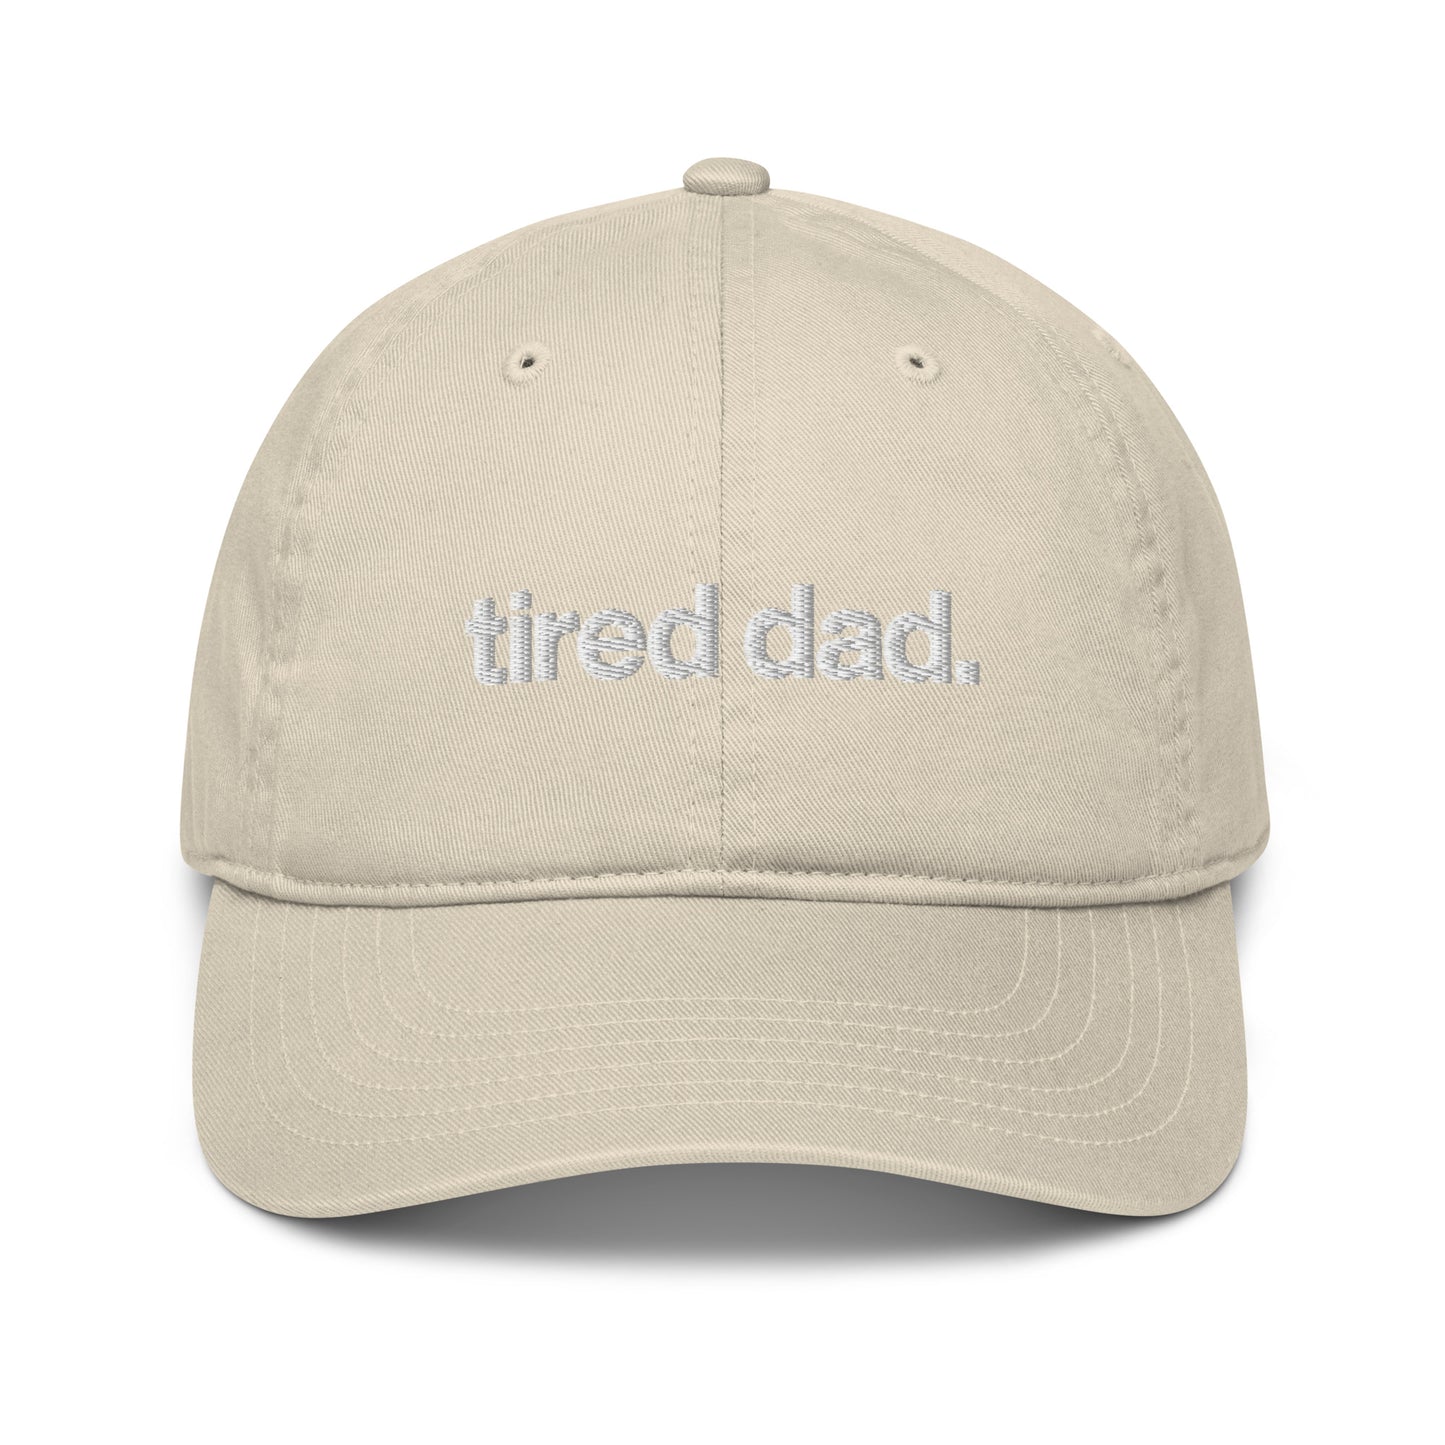 organic tired dad. "dad" hat